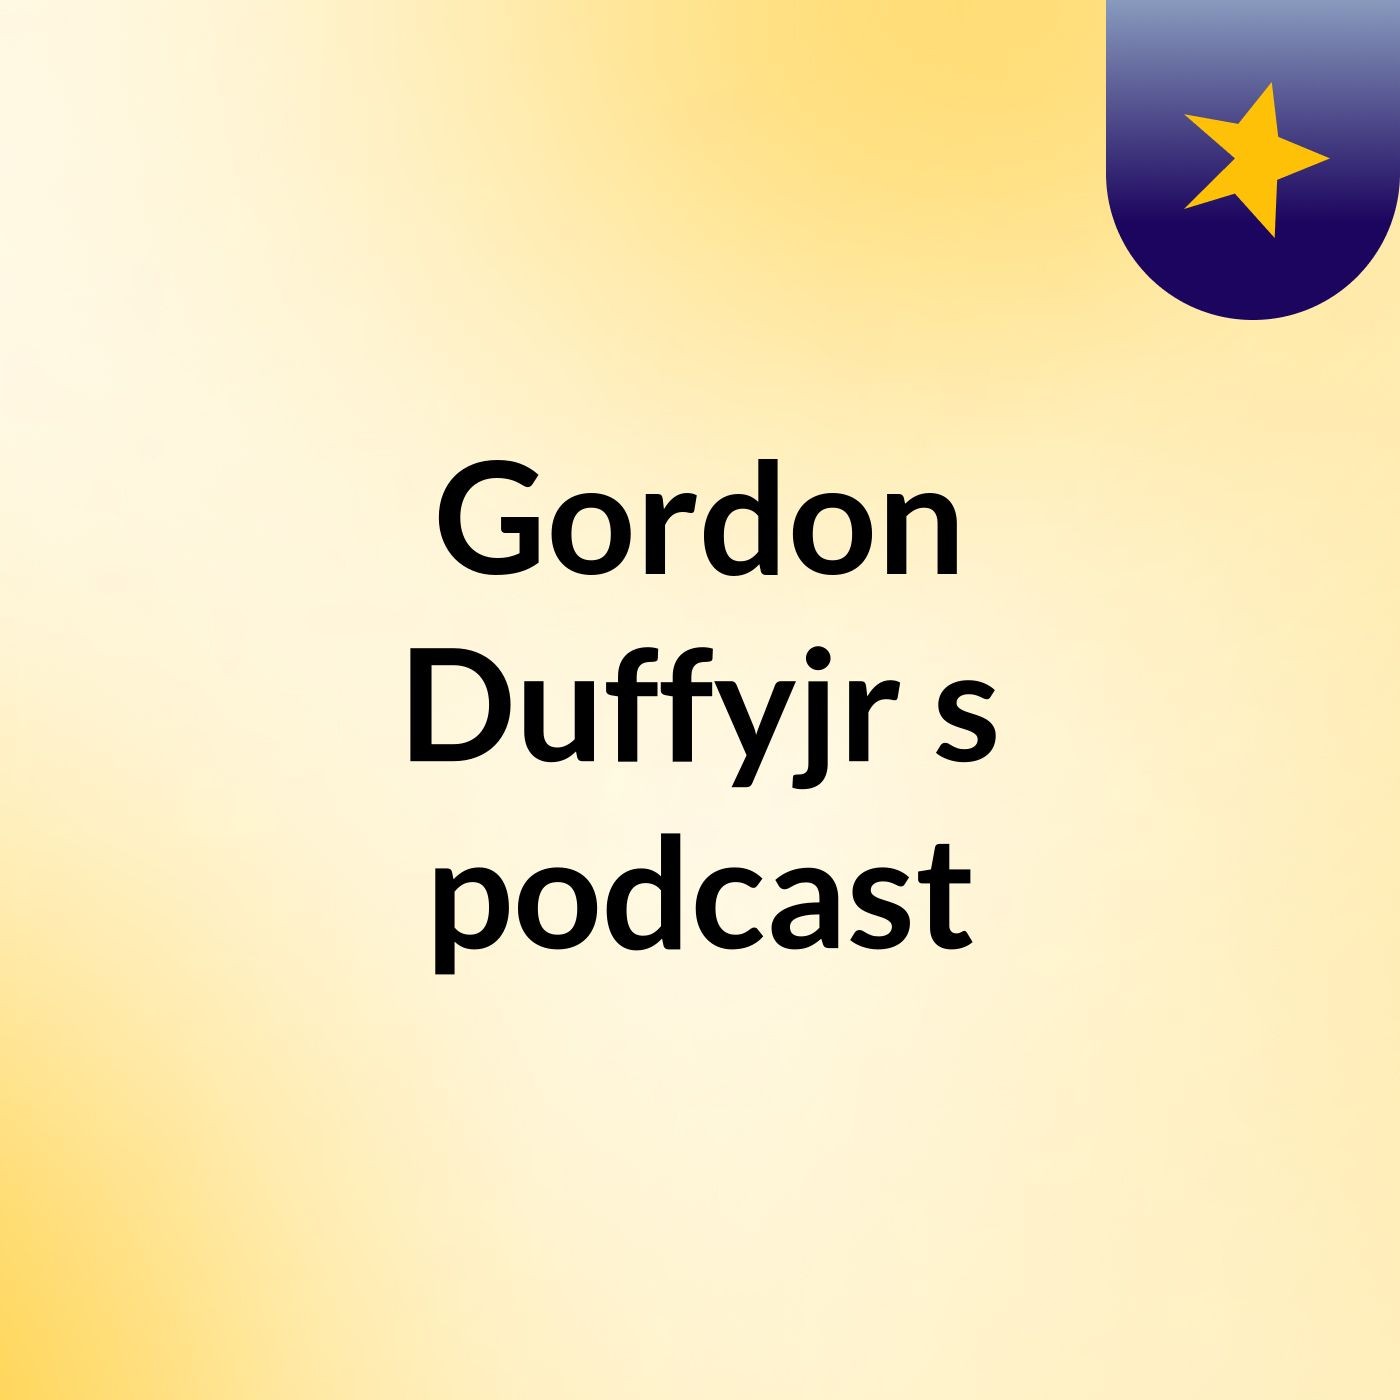 Gordon Duffyjr's podcast